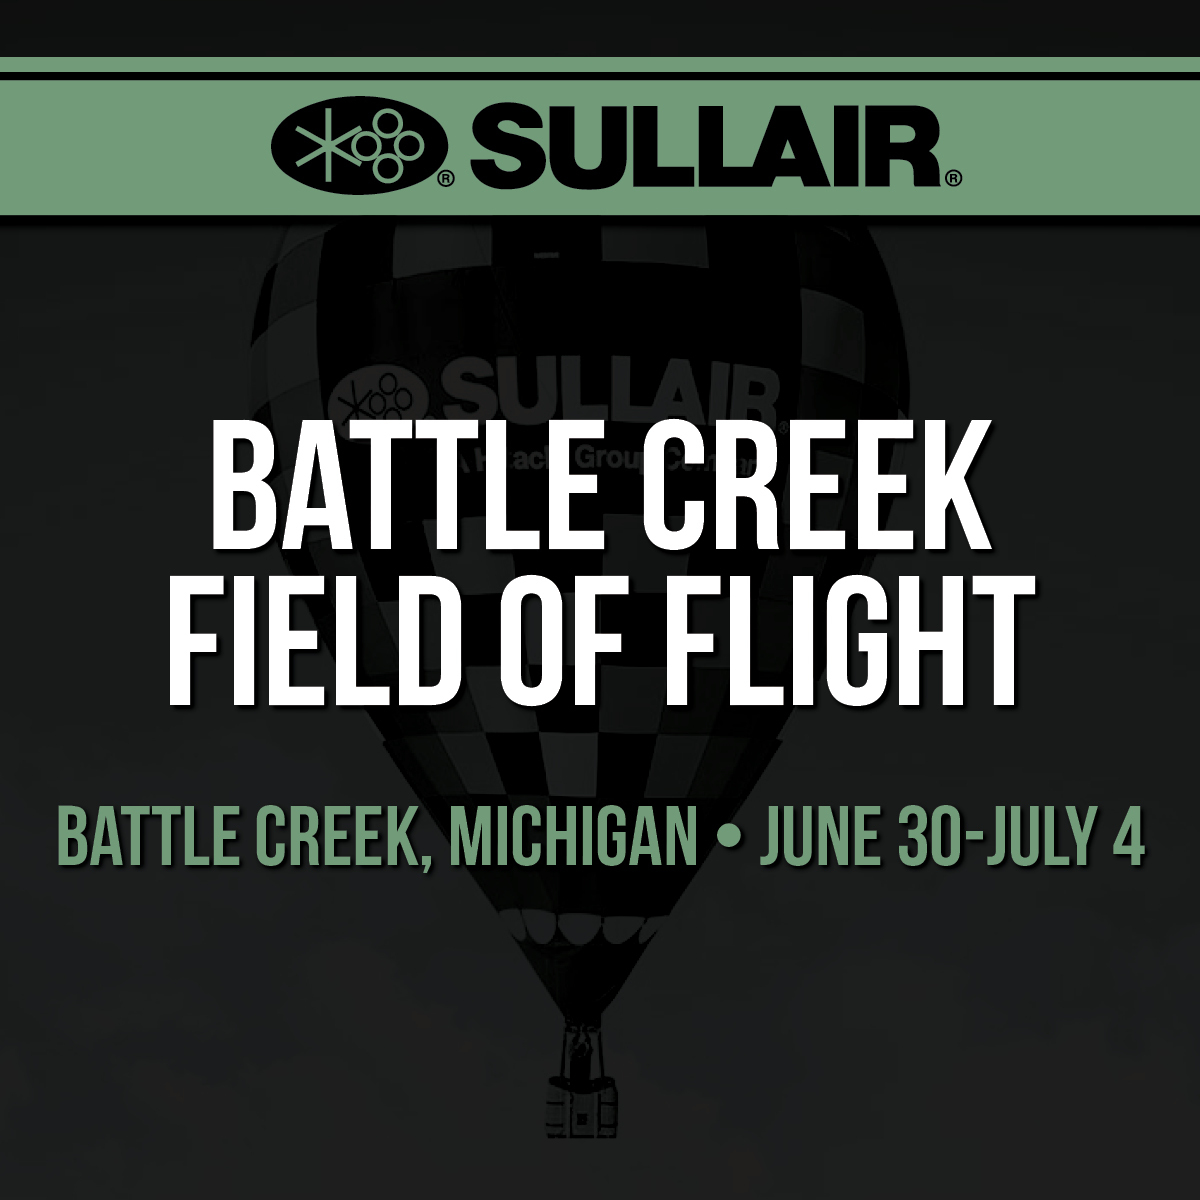 Battle Creek Field of Flight Sullair